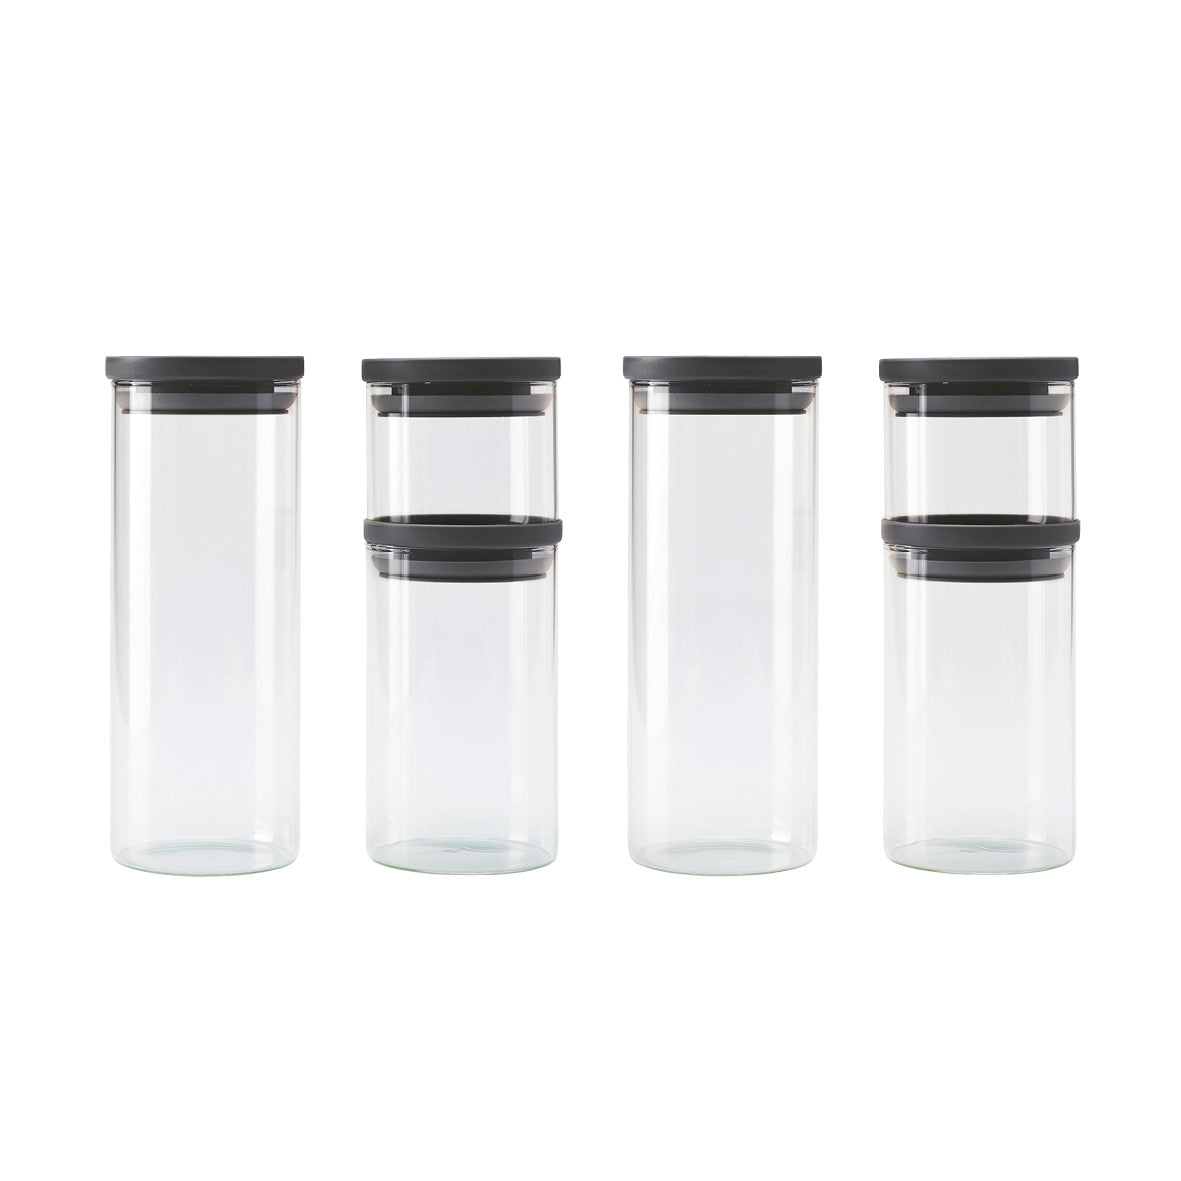 Set of 6 glass jars with plastic lid - transparent and black - 0.5l + 1L + 1.5L